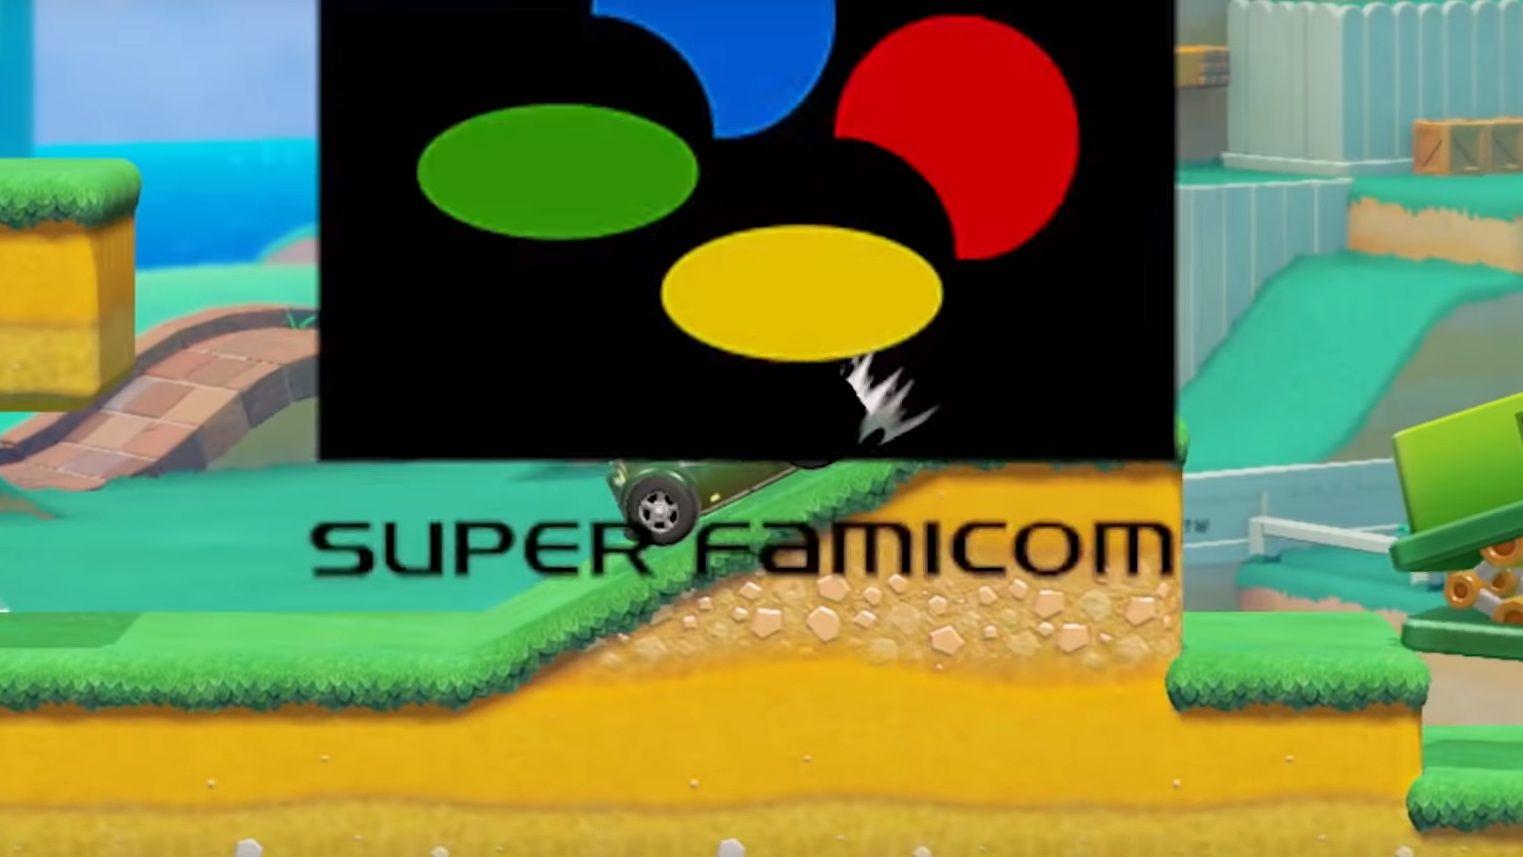 Famicom Logo - Super Famicom Logo In Super Mario Maker 2 Has Fans Speculating ...